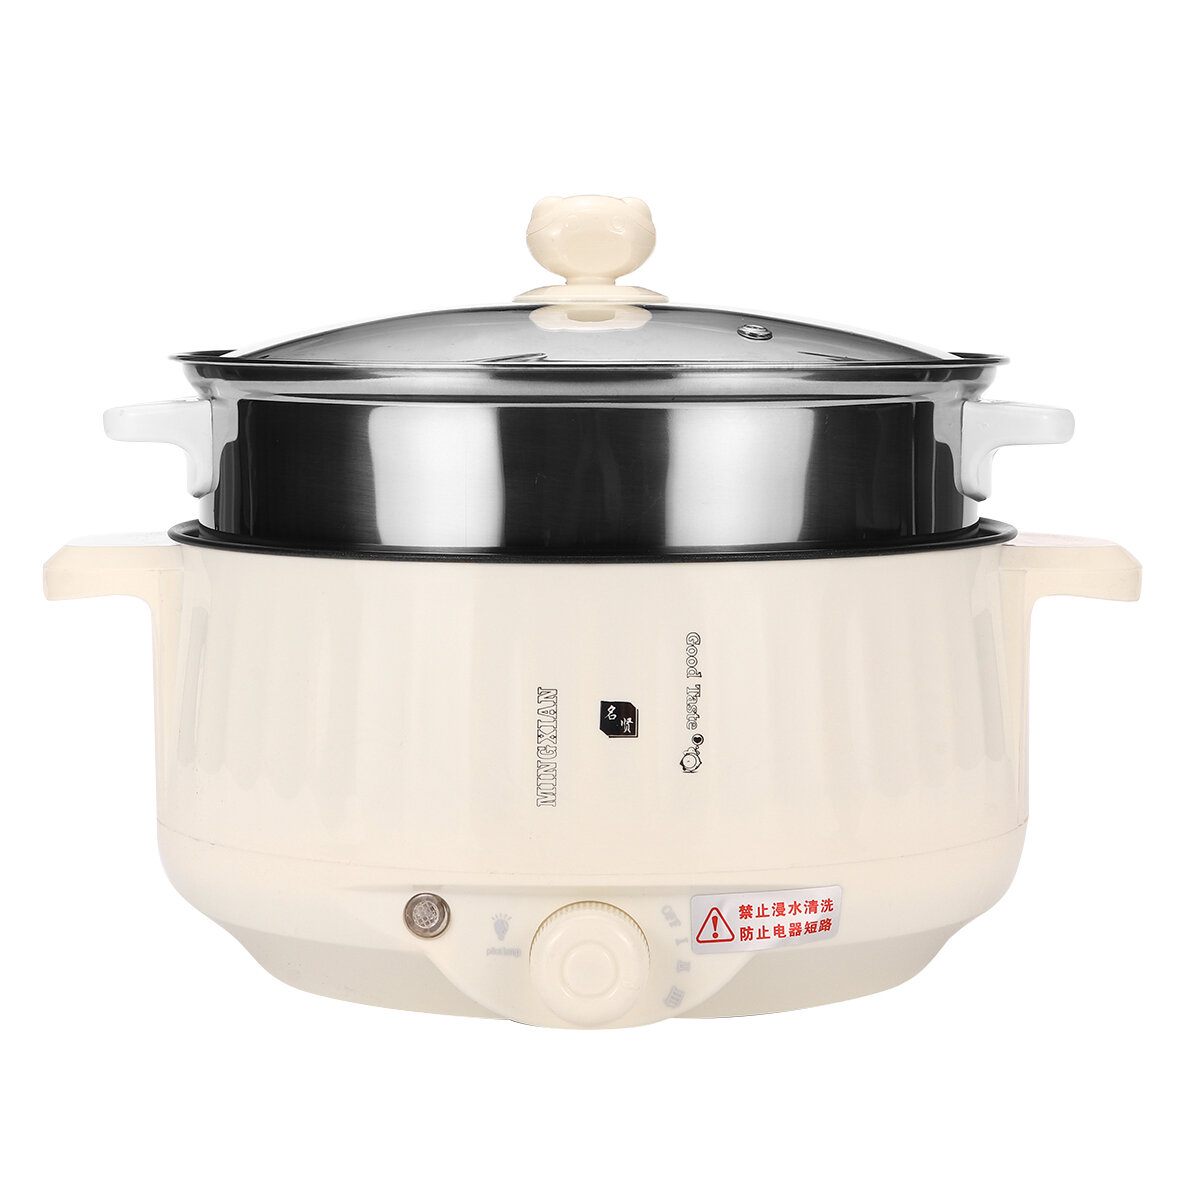 220V Mini Electric Cooking Pot Multifunction Rice Cooker Hot Pot Noodles Egg Soup Steamer Non-stick 